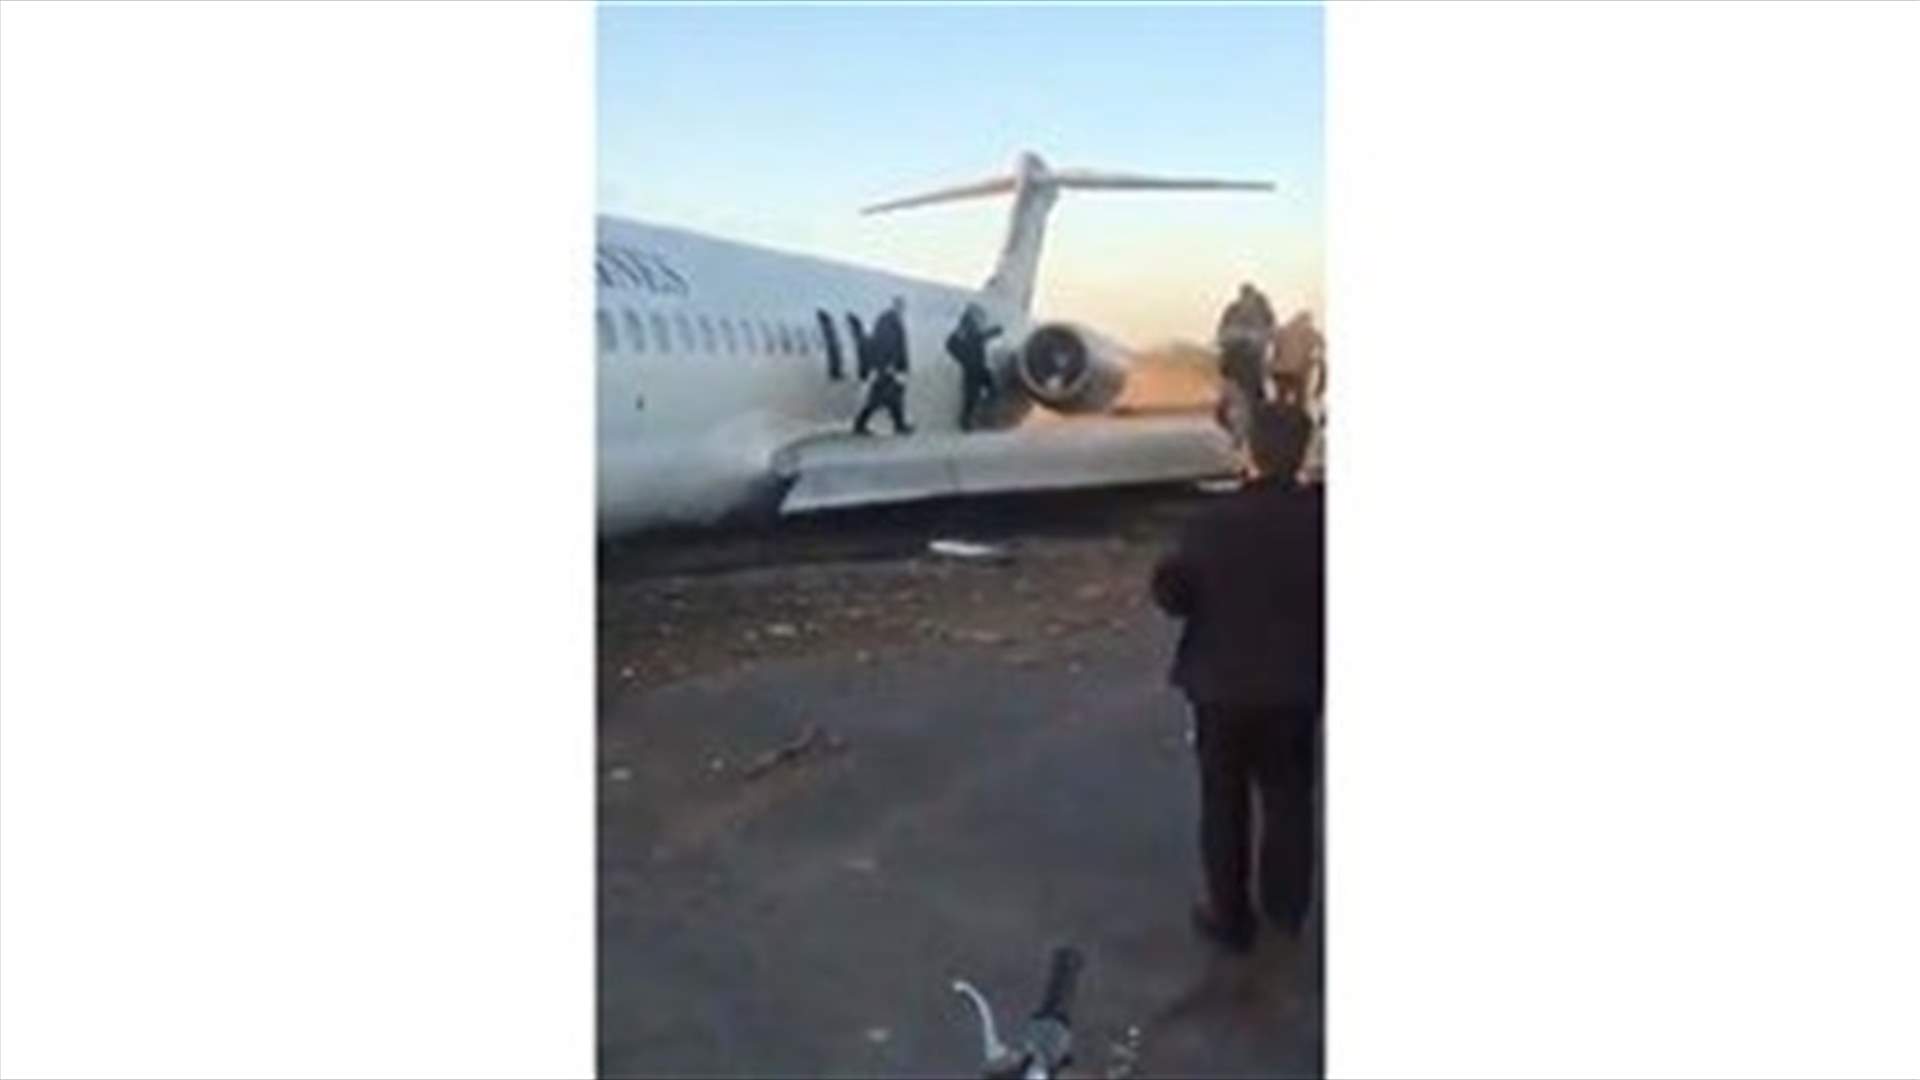 Iranian passenger plane slides off runway into highway, passengers safe